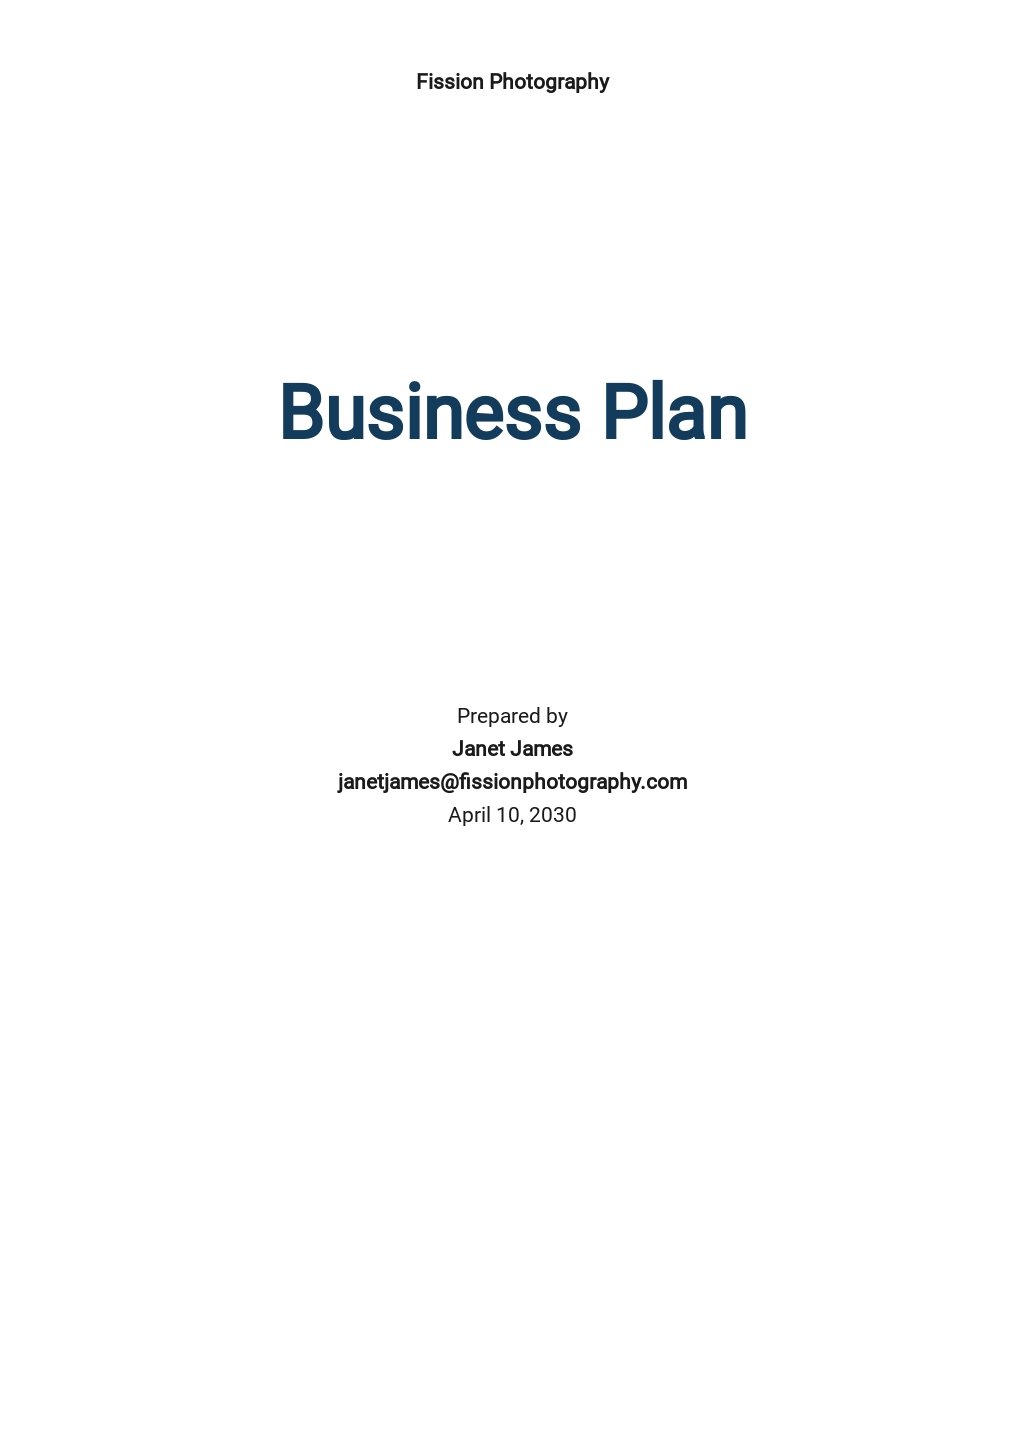 Blank University Business Plan Template [Free PDF] - Google Docs, Word ...